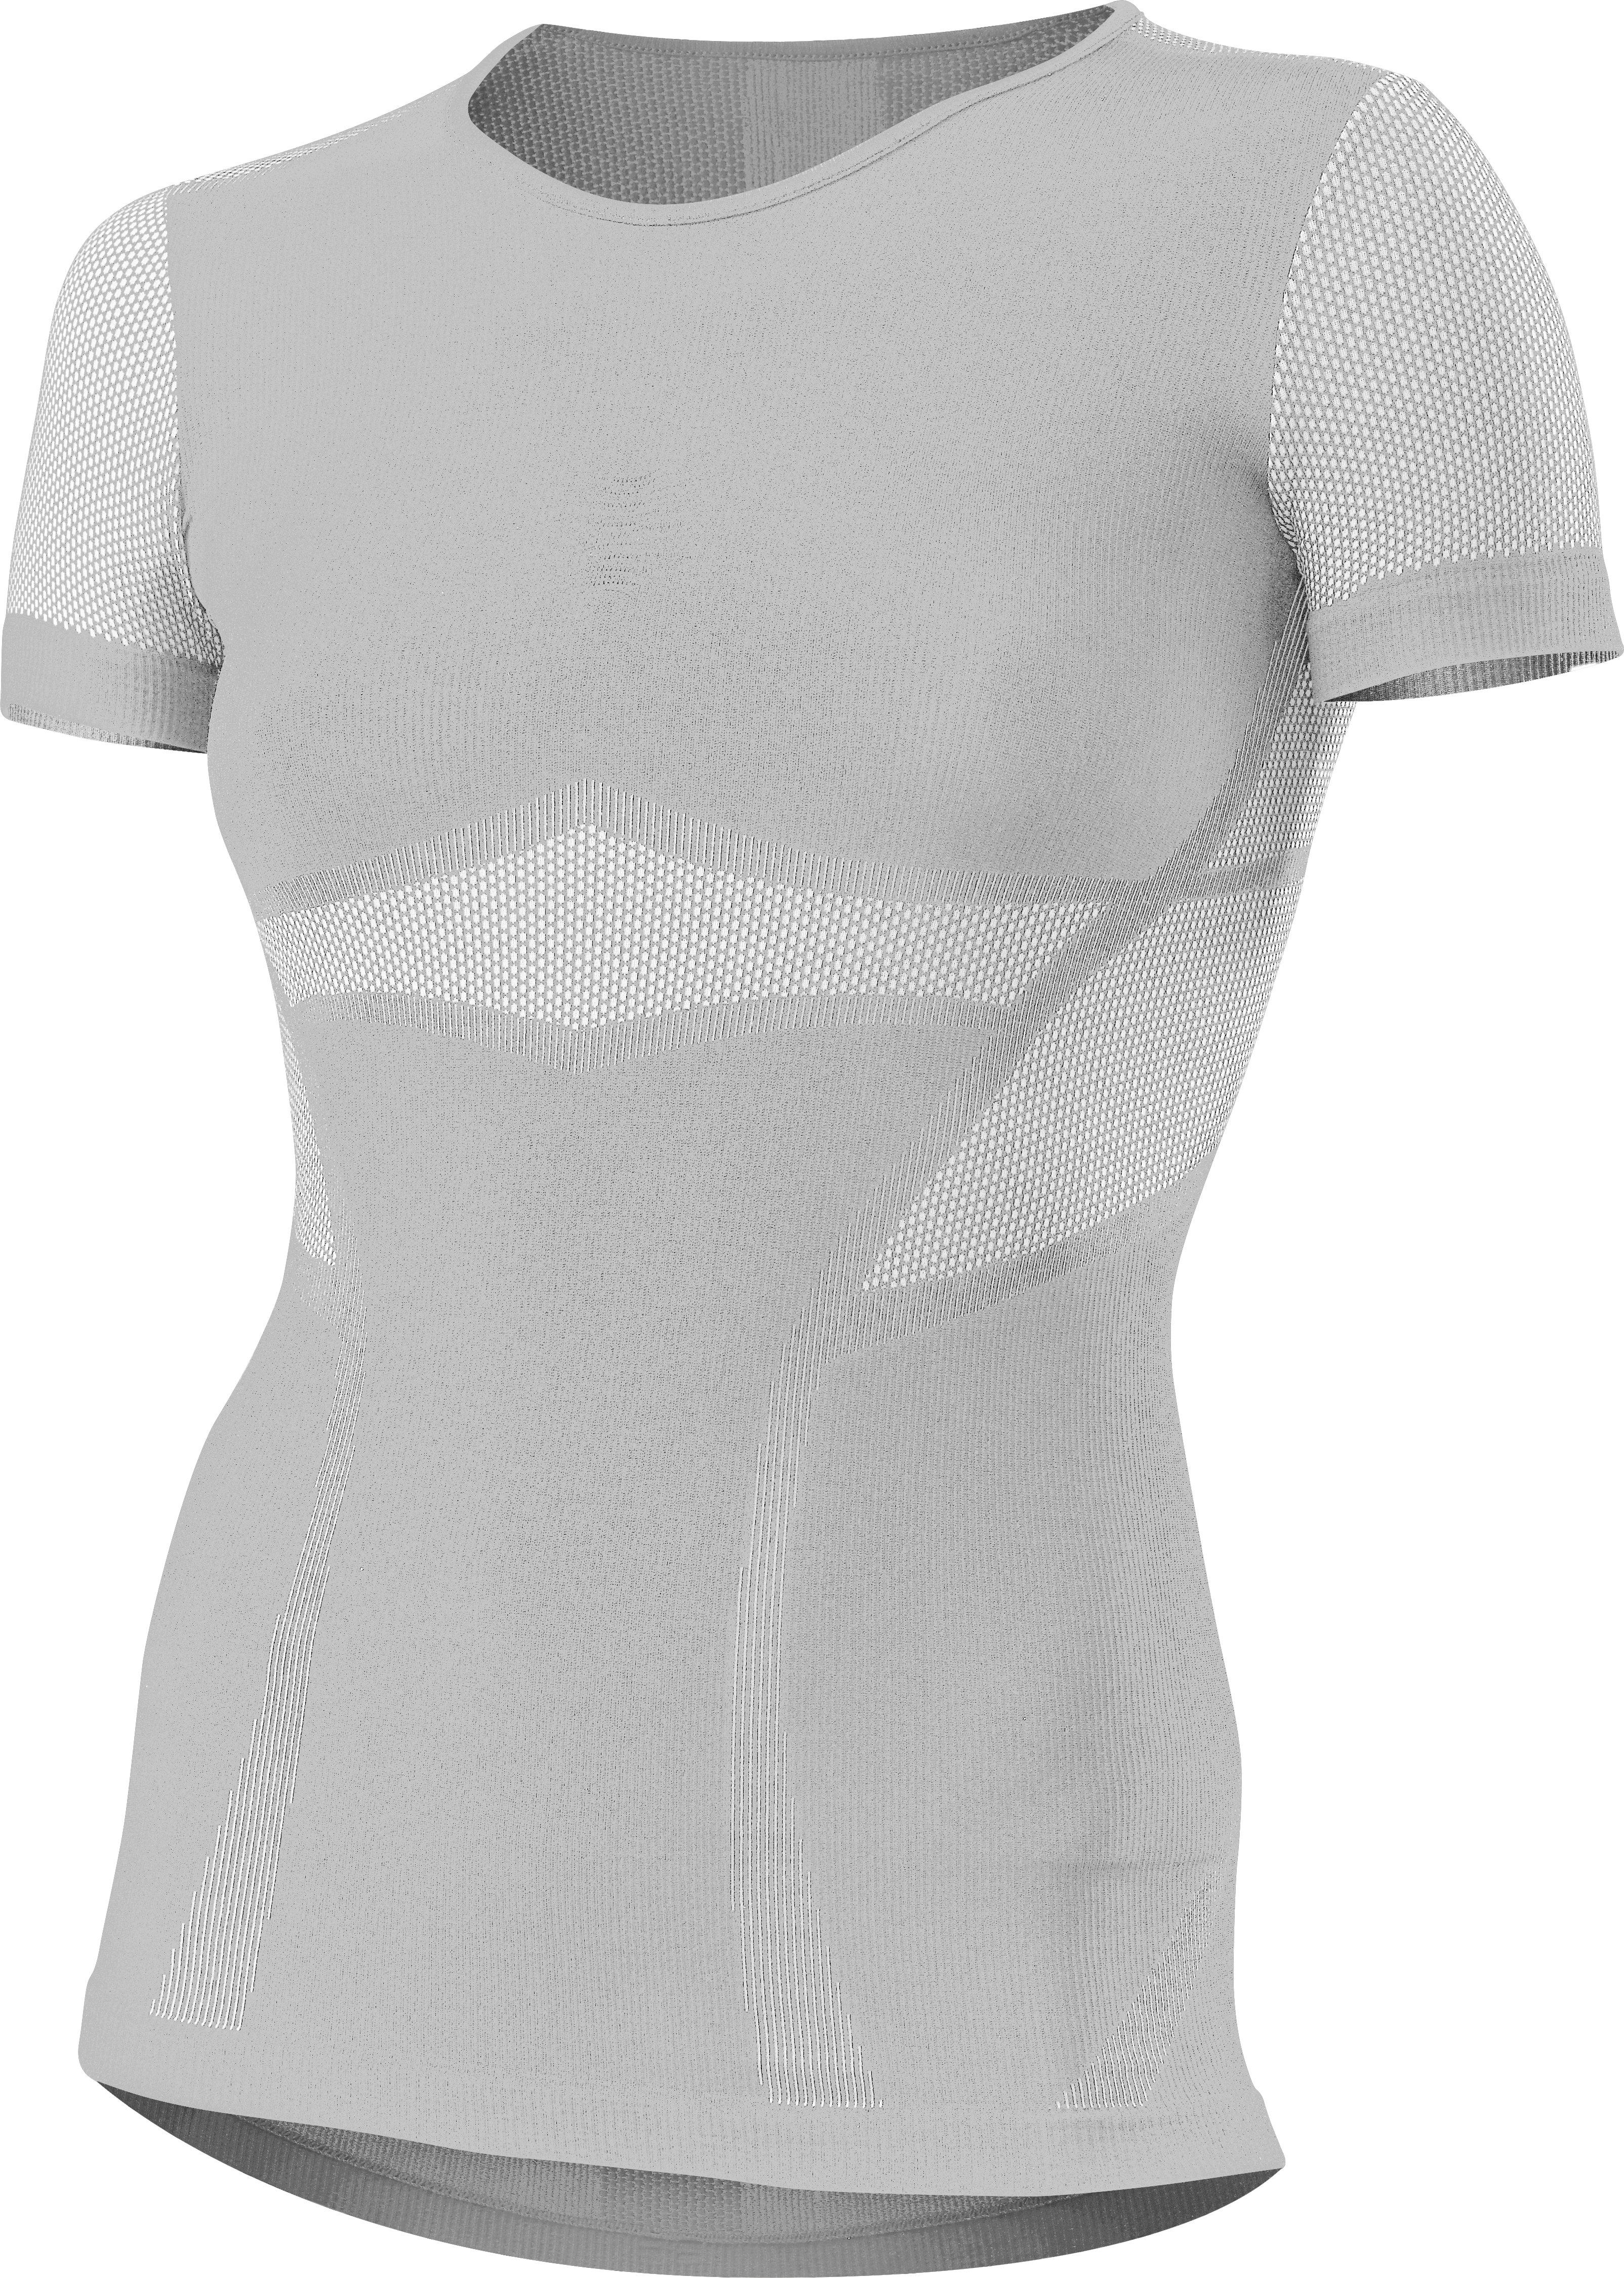 Women's Engineered Short Sleeve Tech Layer